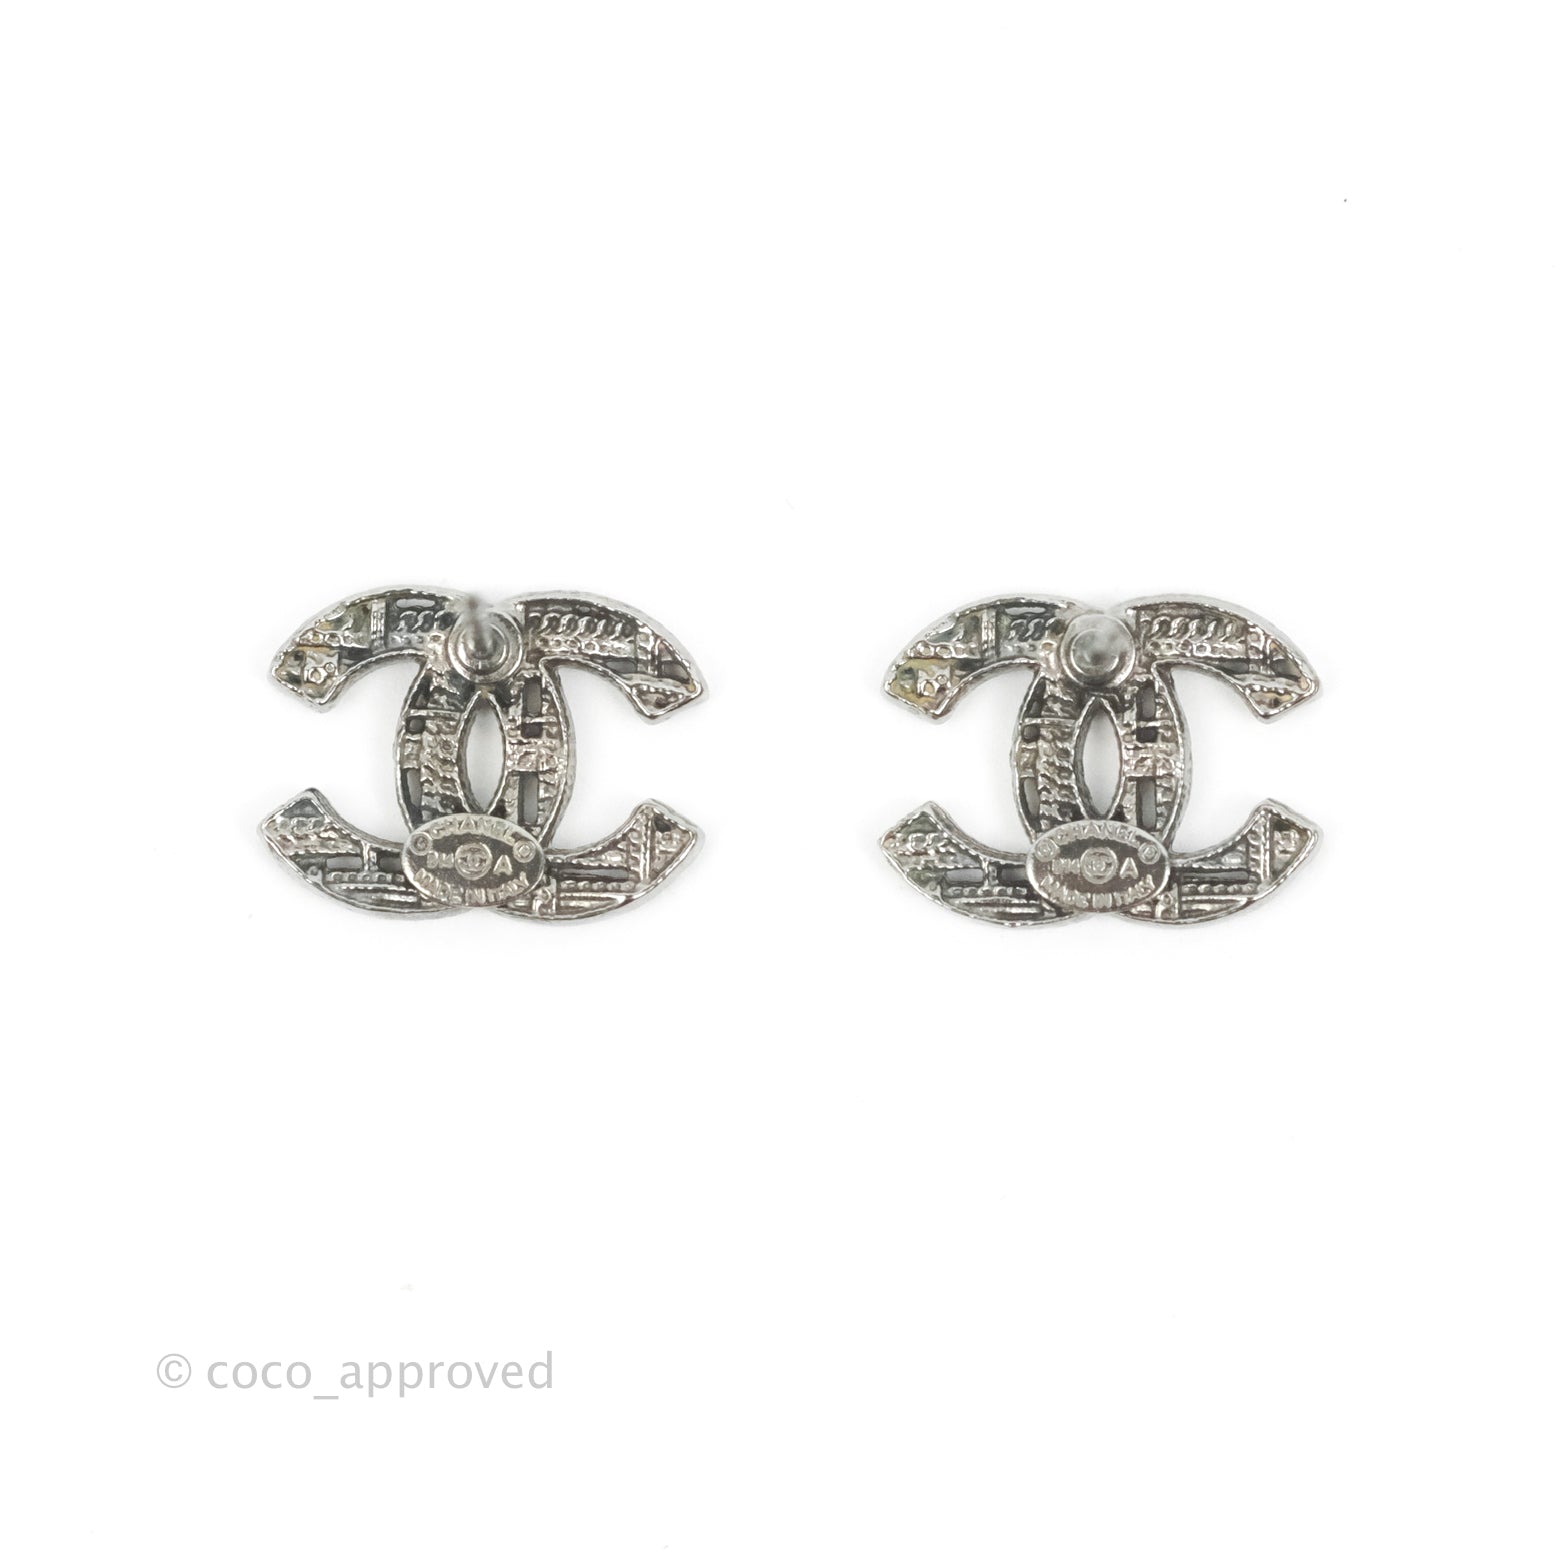 AUTHENTIC CHANEL B20 S Drop Logo Crystal earrings in Chanel Box